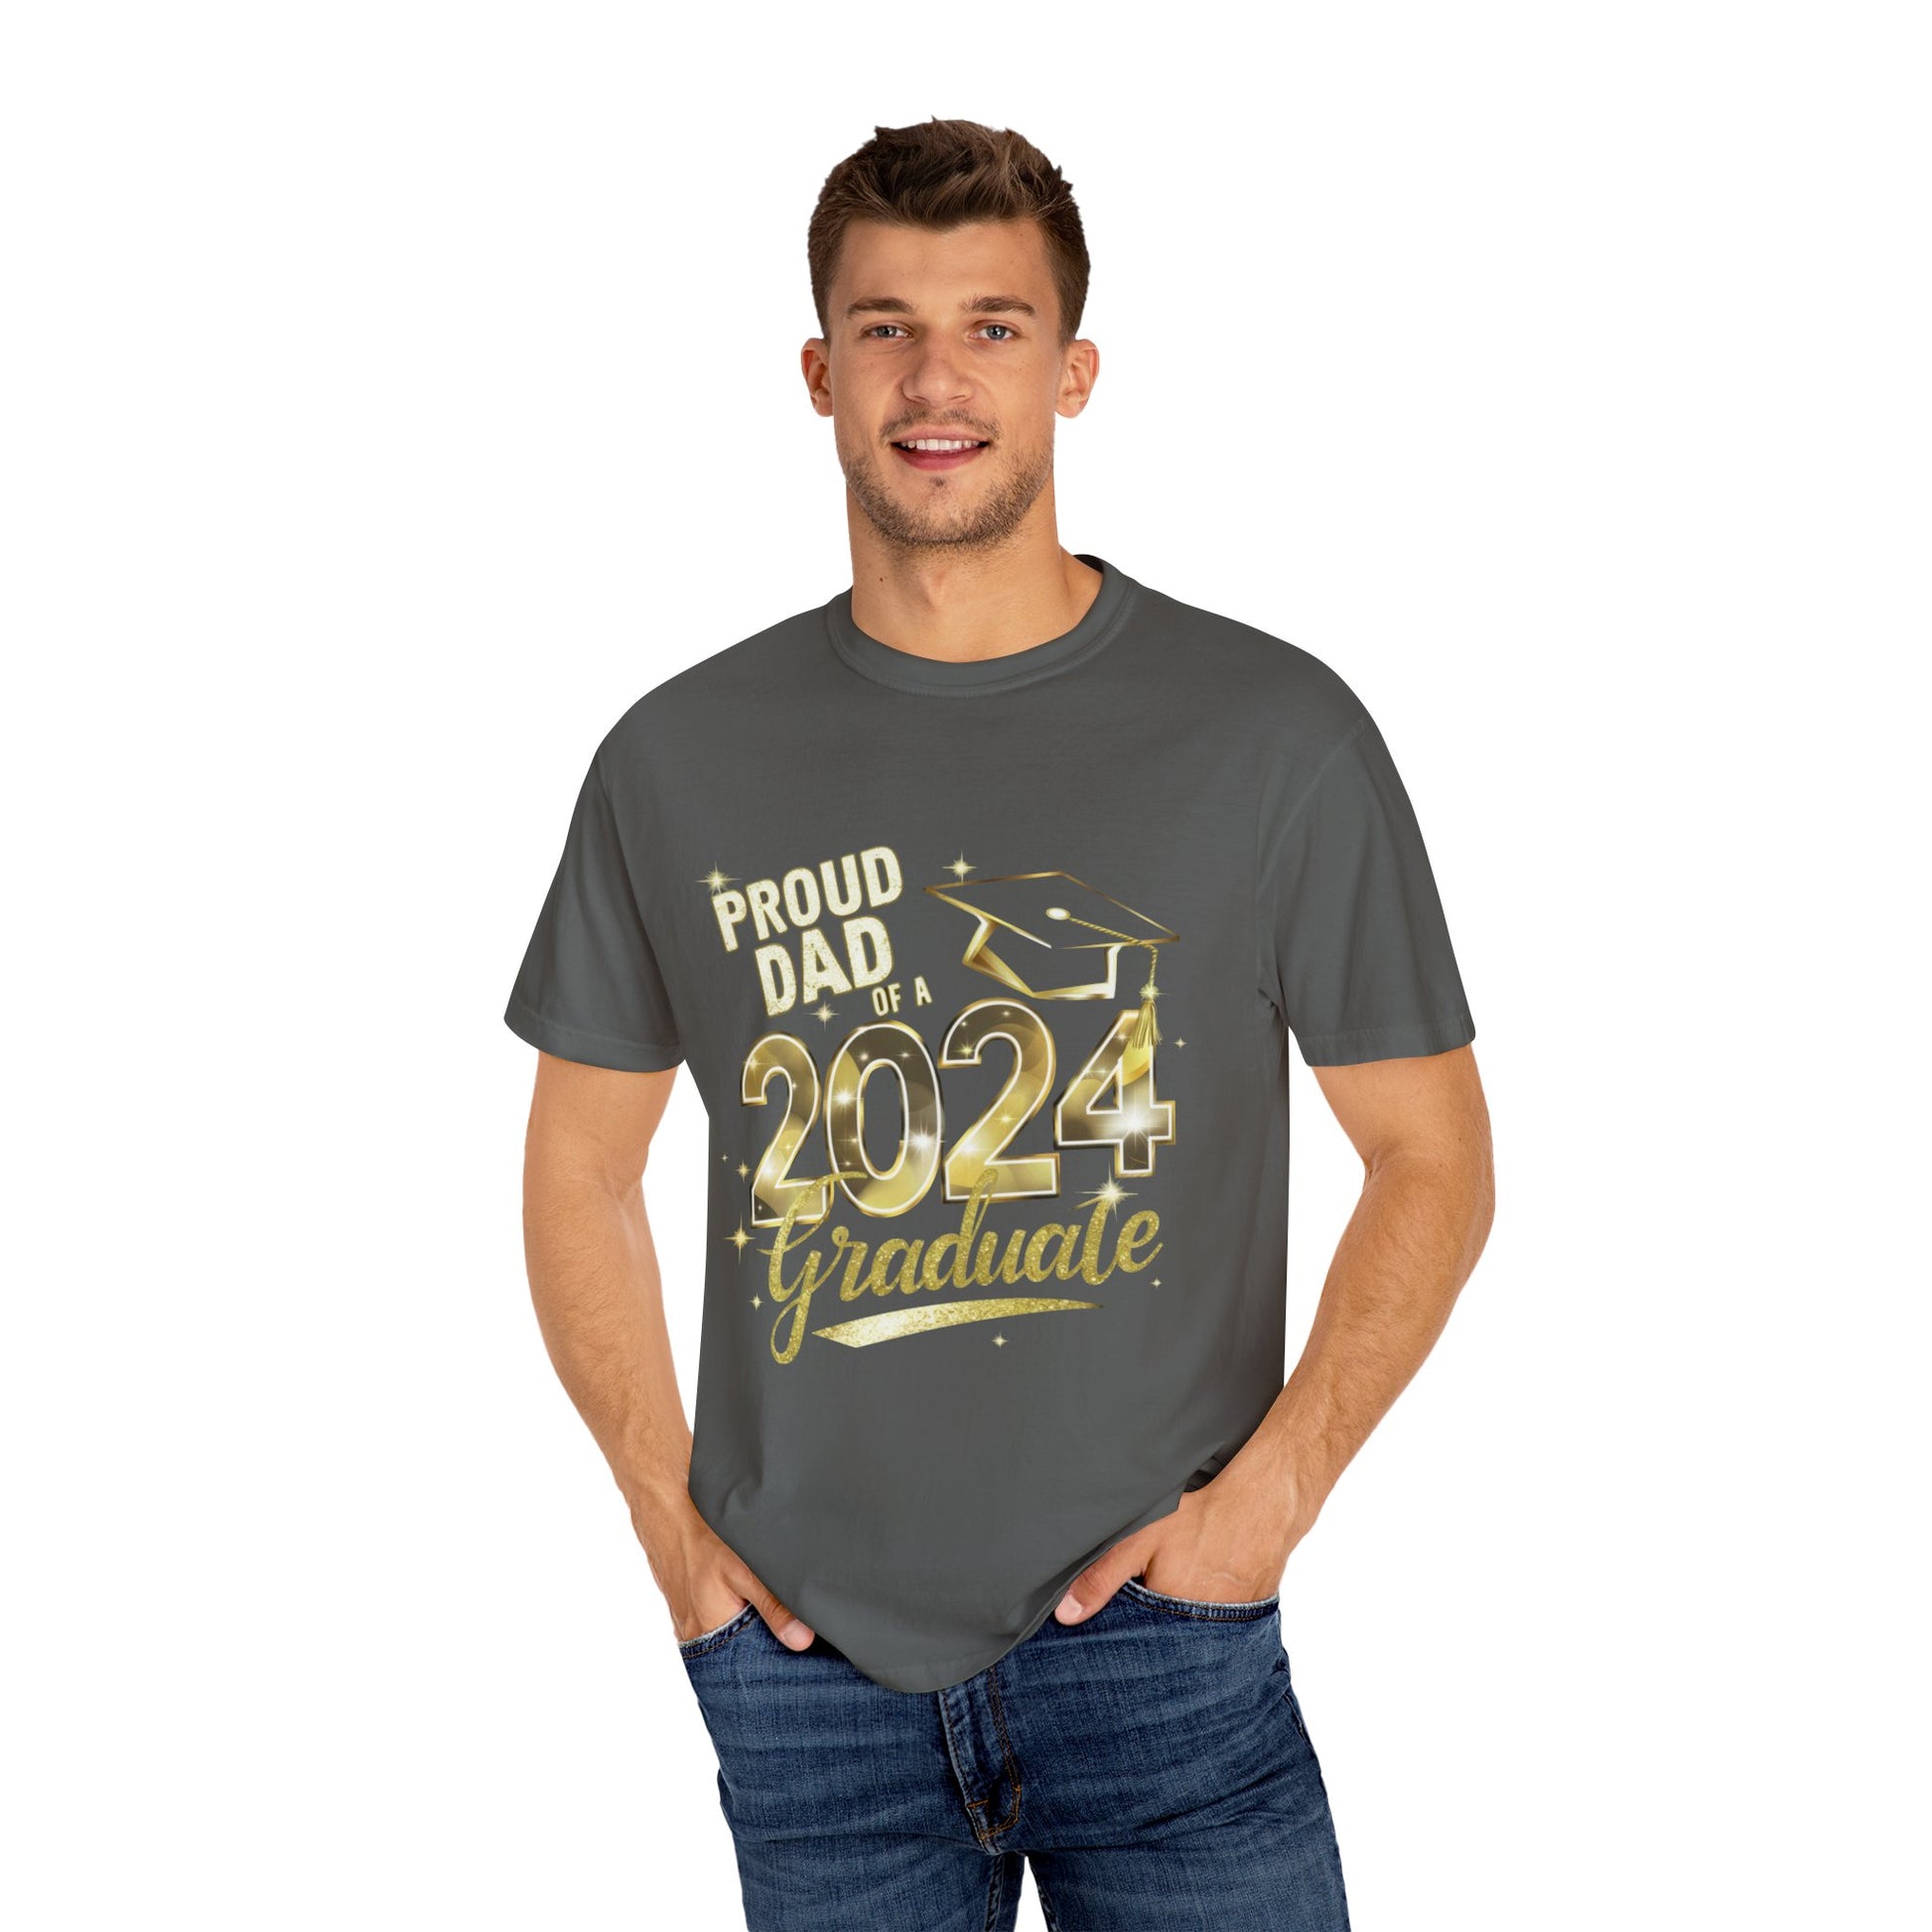 Proud of Dad 2024 Graduate Unisex Garment-dyed T-shirt Cotton Funny Humorous Graphic Soft Premium Unisex Men Women Pepper T-shirt Birthday Gift-51